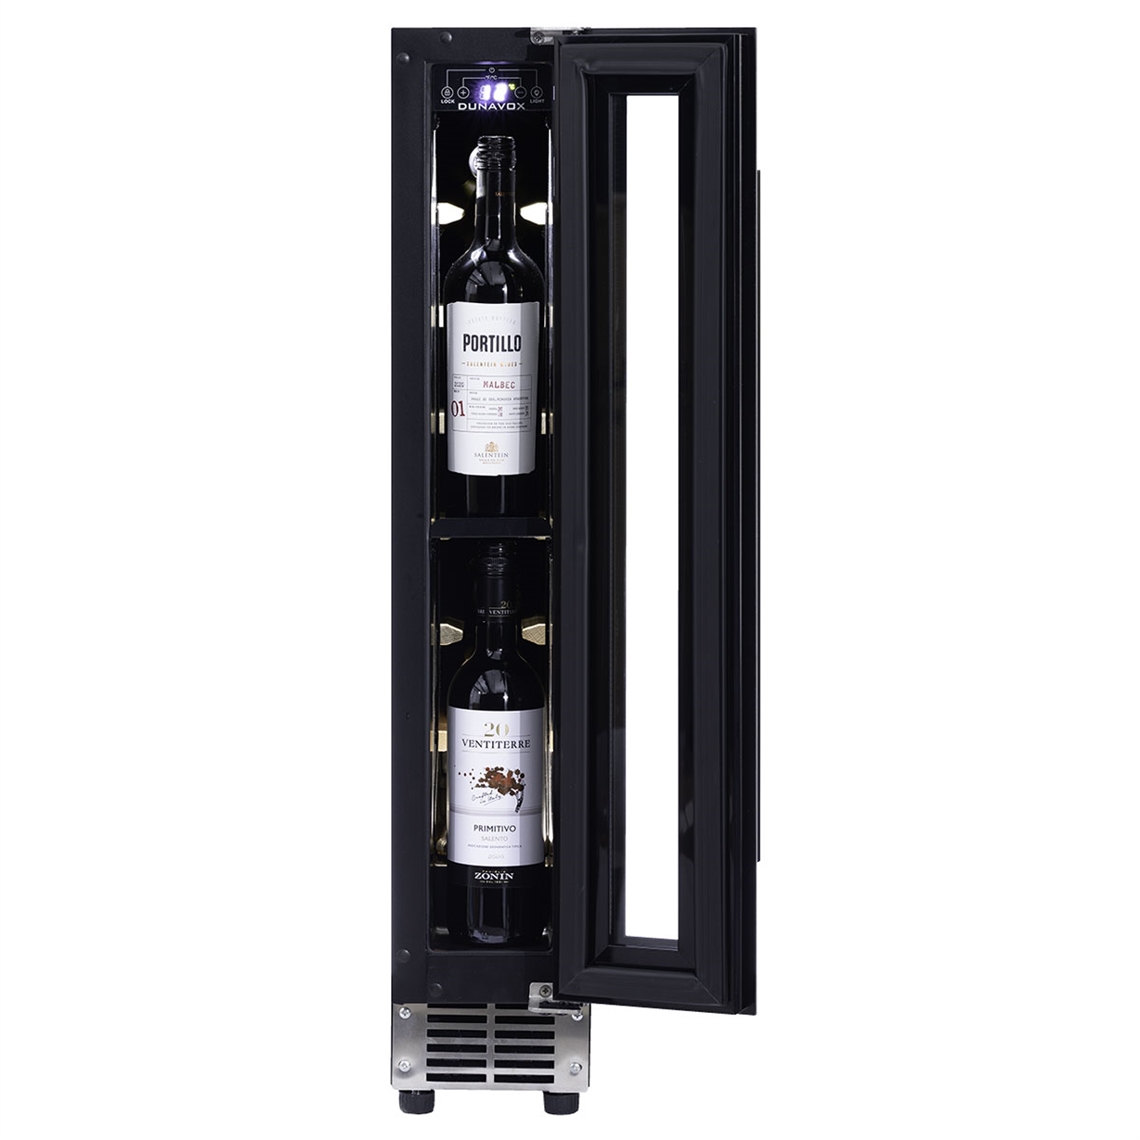 Dunavox Wine Cabinet Flow - Single Temperature Built-In Under Counter - Stainless Steel DAUF-9.22SS